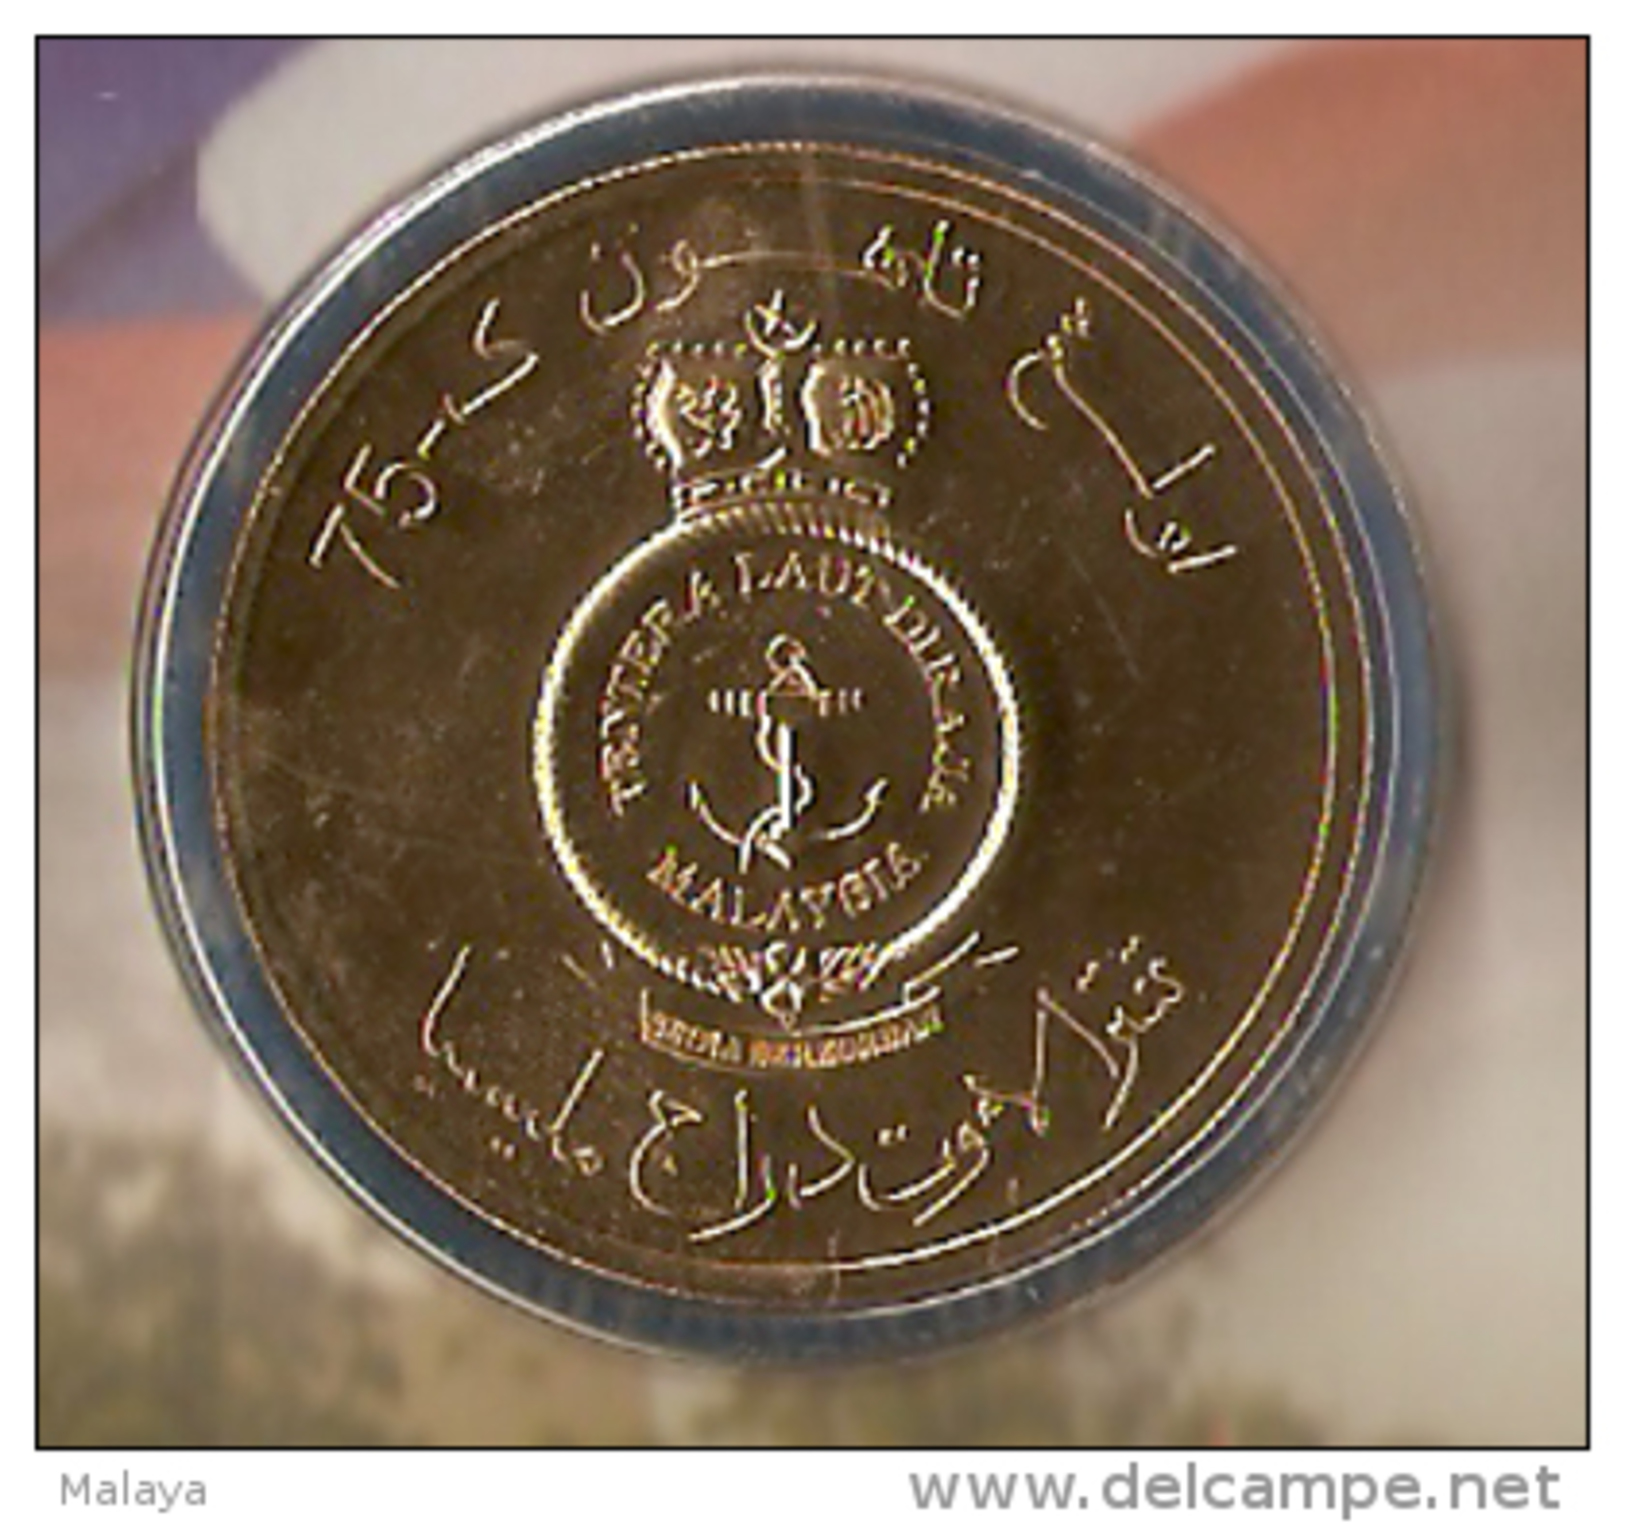 Malaysia 2009 1 Ringgit Nordic Gold Coin BU 75th Anniversary Of The Royal Malaysian Navy - Malaysia